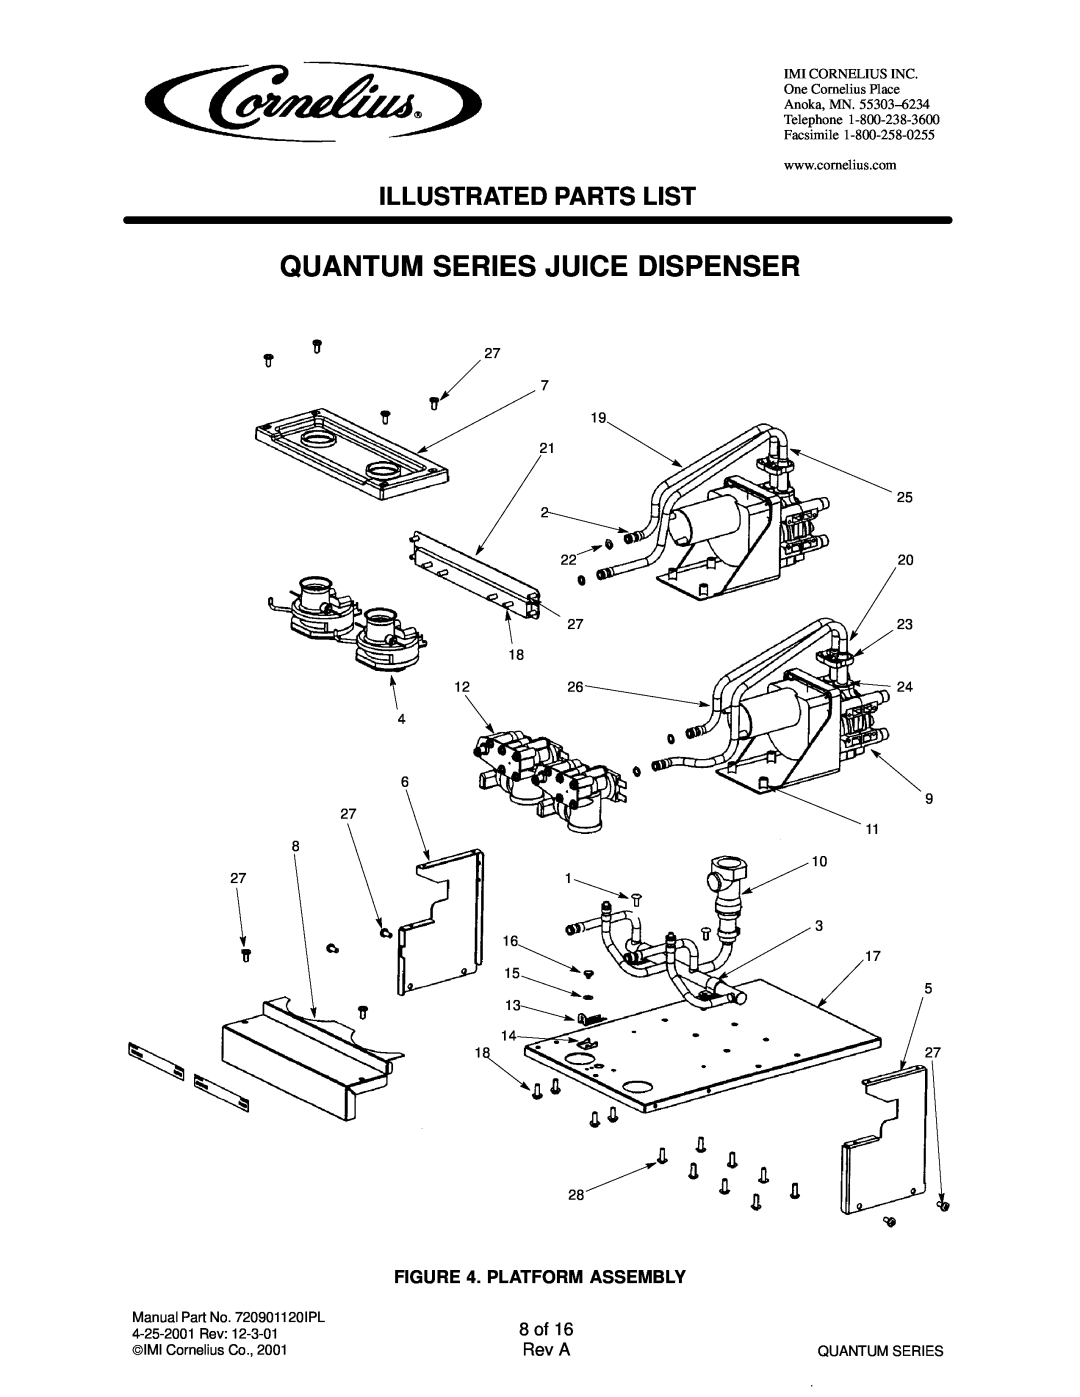 Cornelius QUANTUM SERIES service manual Quantum Series Juice Dispenser, Illustrated Parts List, Platform Assembly, of Rev A 